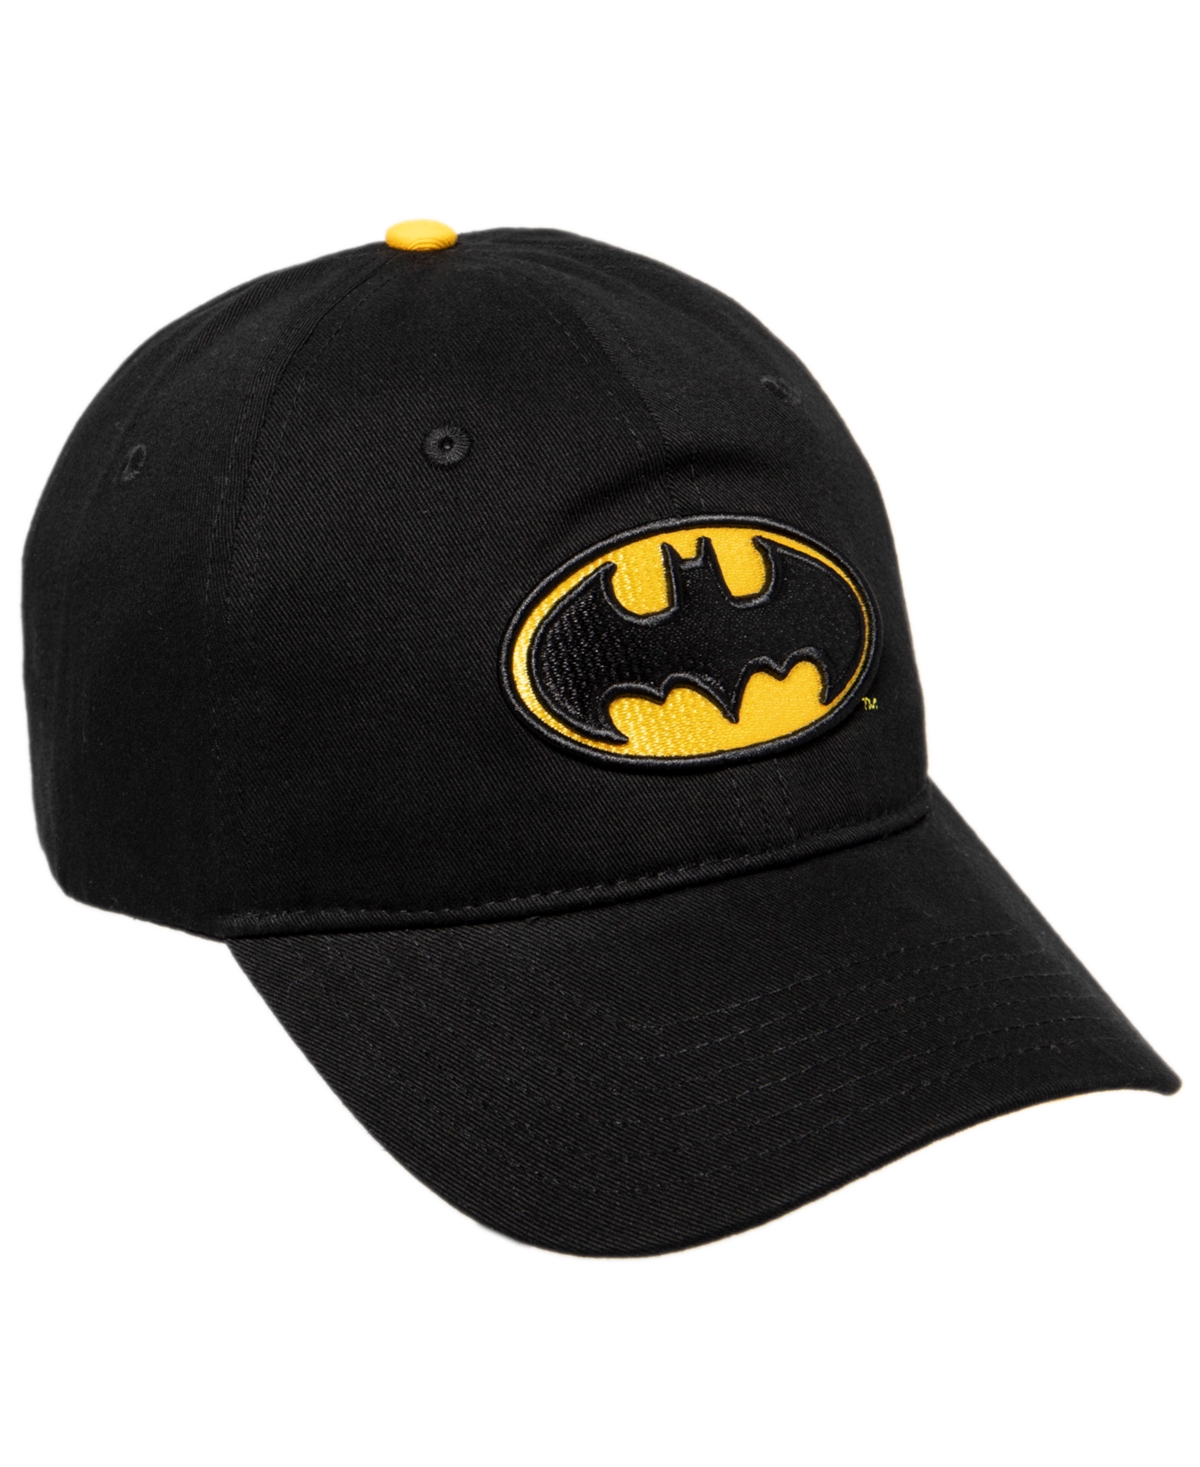 Men's Dc Comics Batman Low Profile Unstructured Dad Hat Adjustable Baseball Cap - Black, Gold-Tone